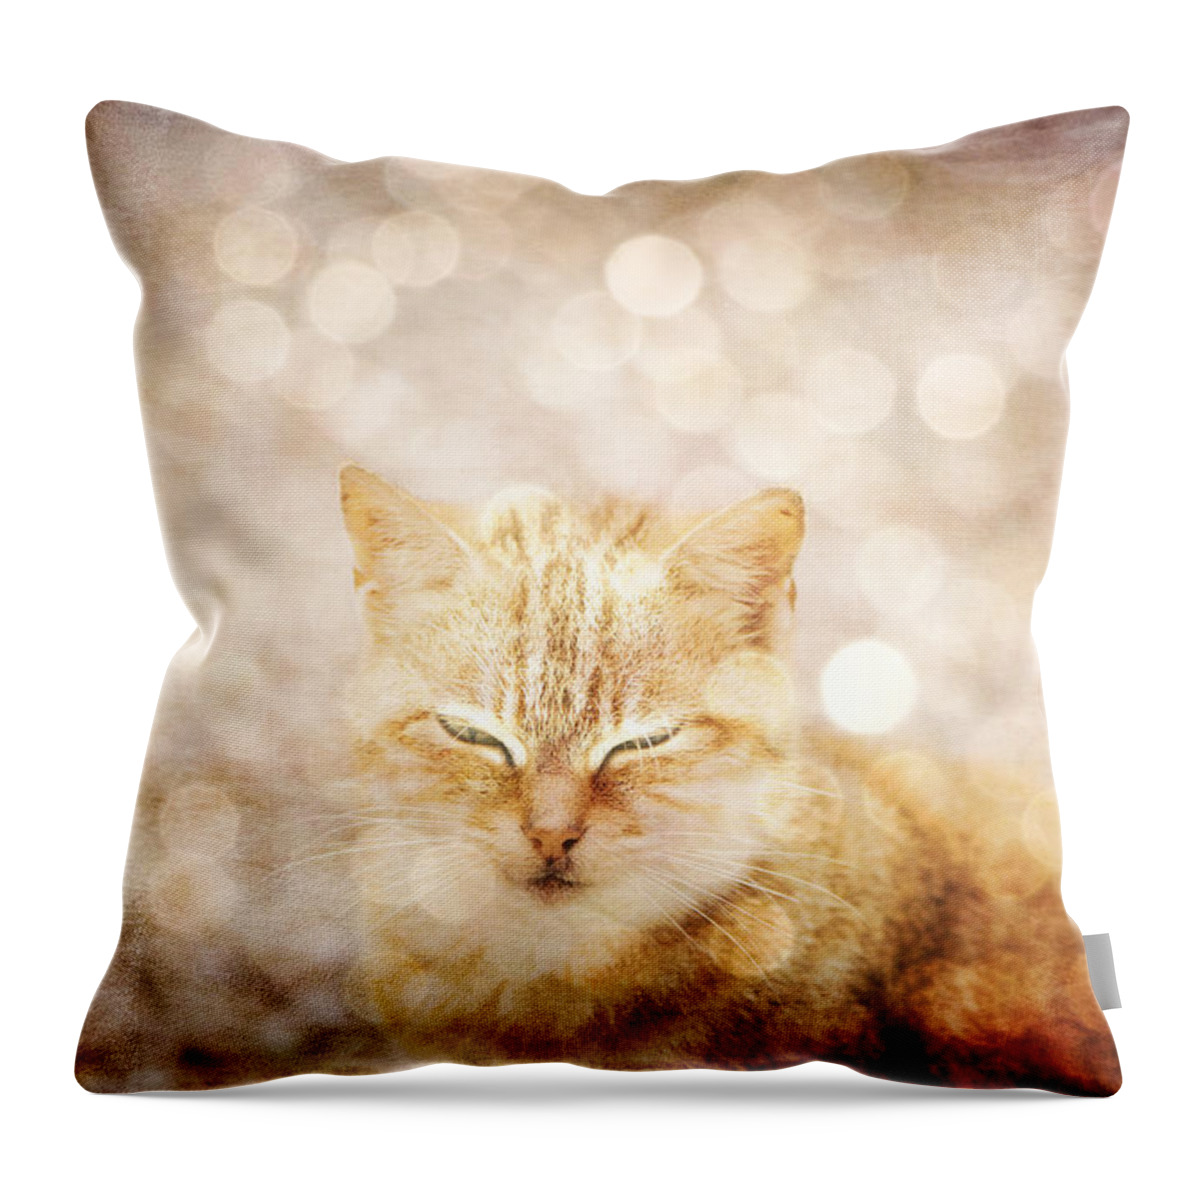 Cat Throw Pillow featuring the photograph A cat dream by Yasmina Baggili